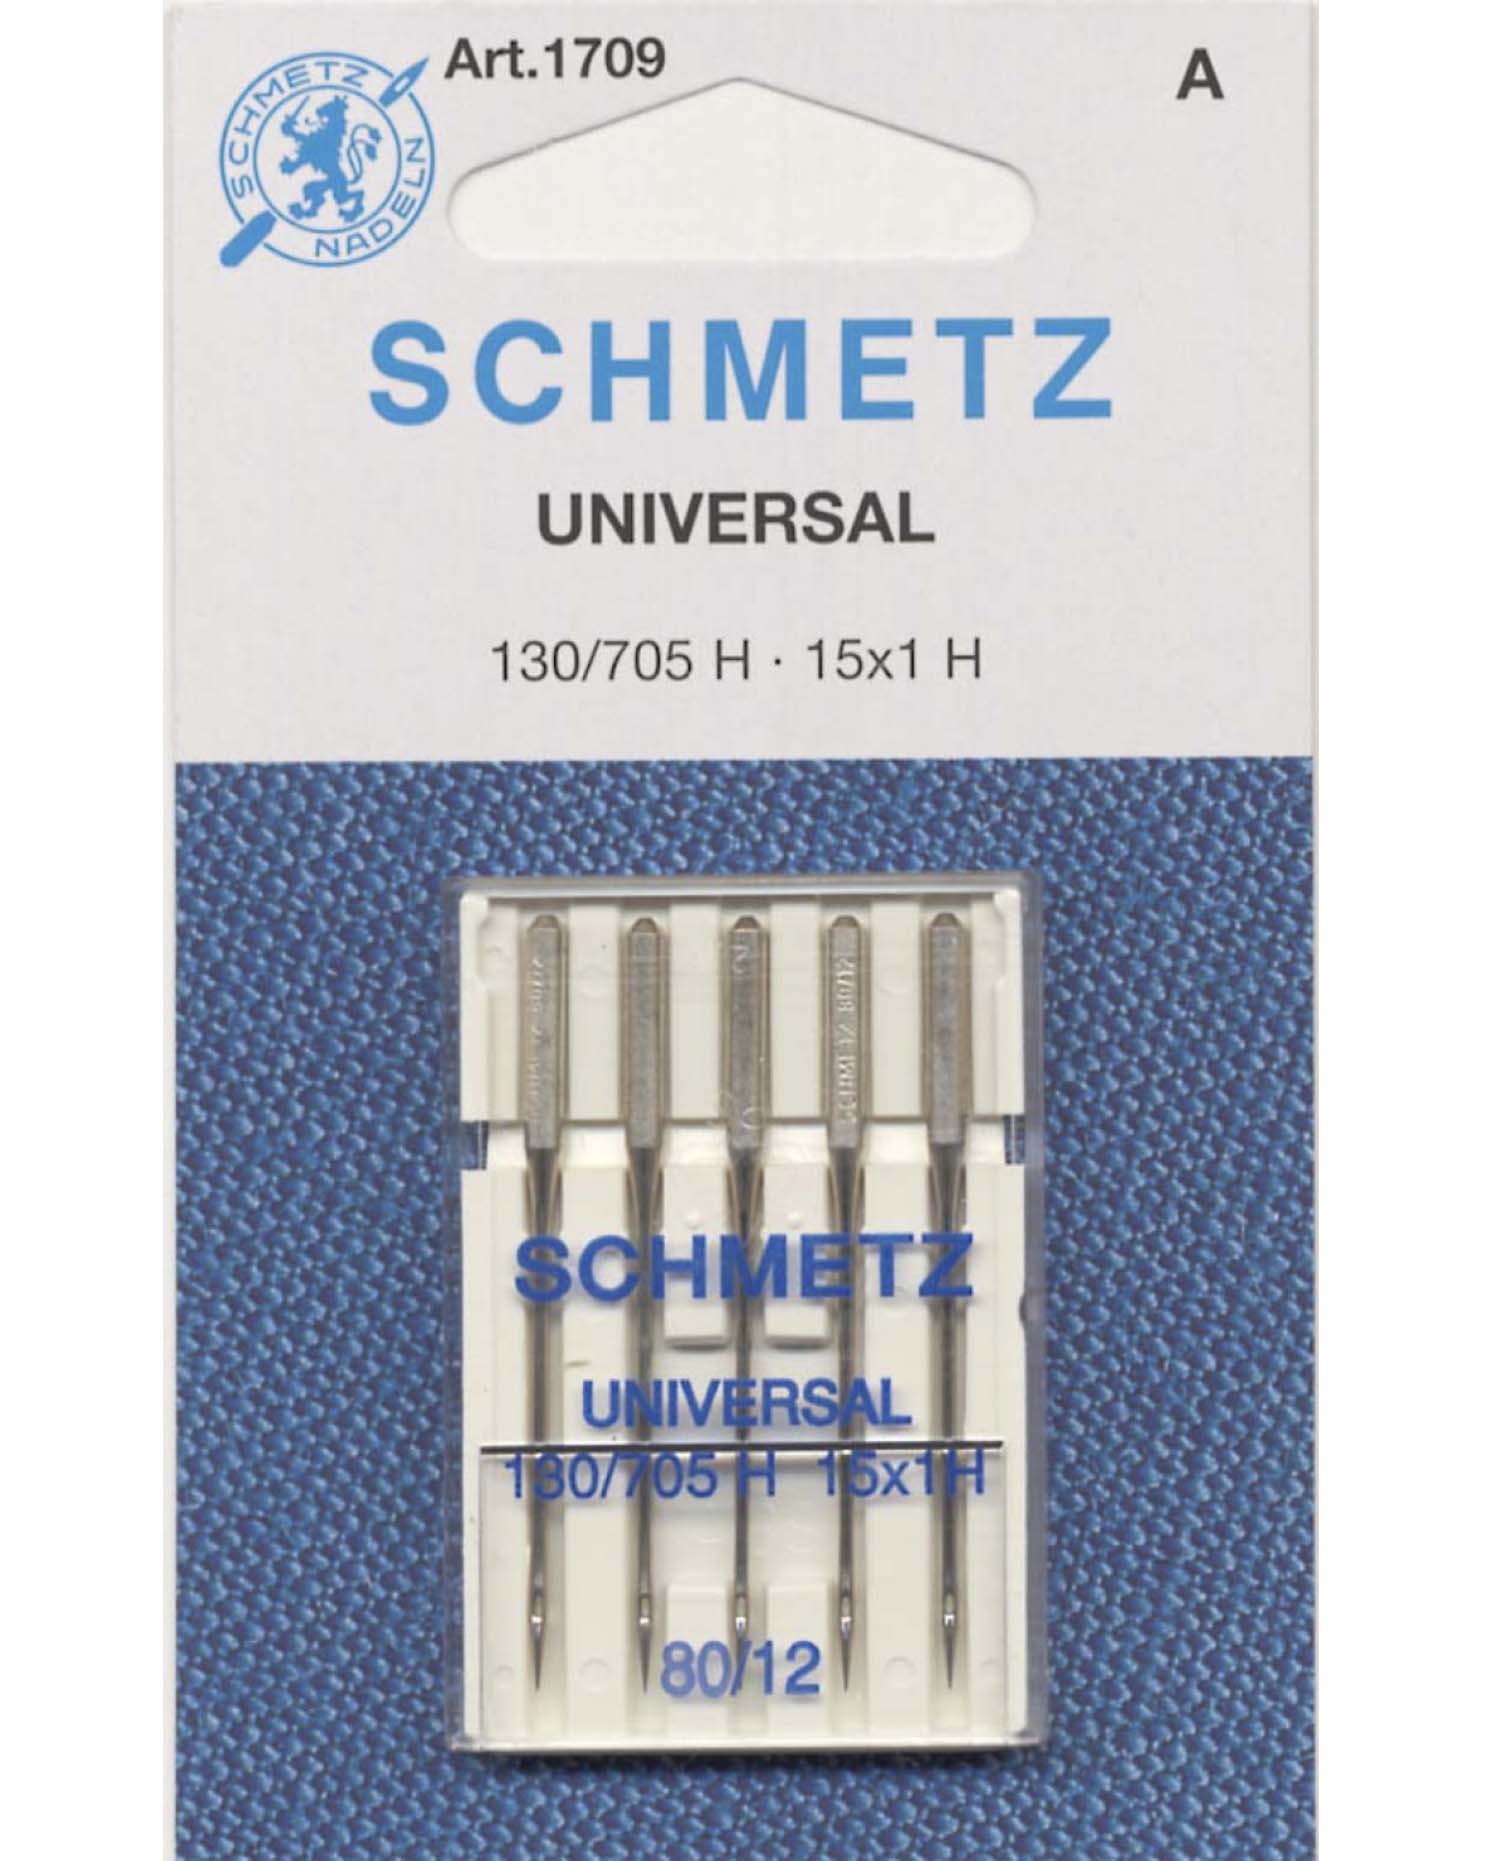 Universal Machine Needles Size 12/80, 5 pc Schmetz